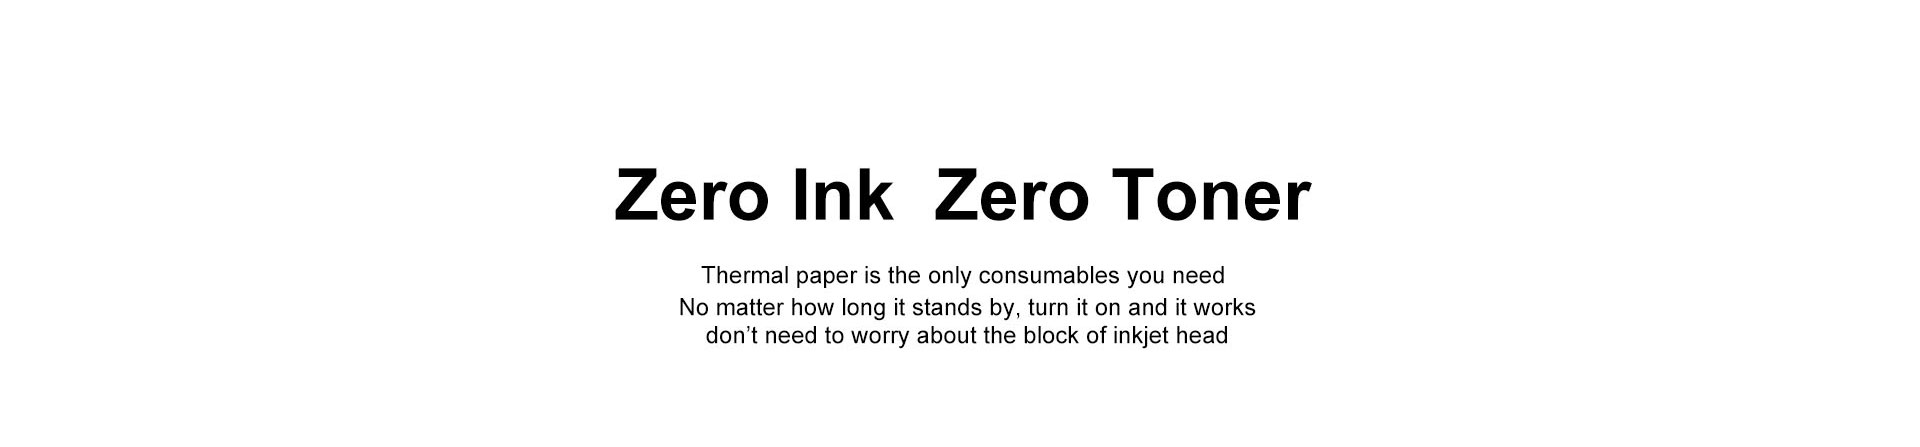 Zero Ink Zero Toner